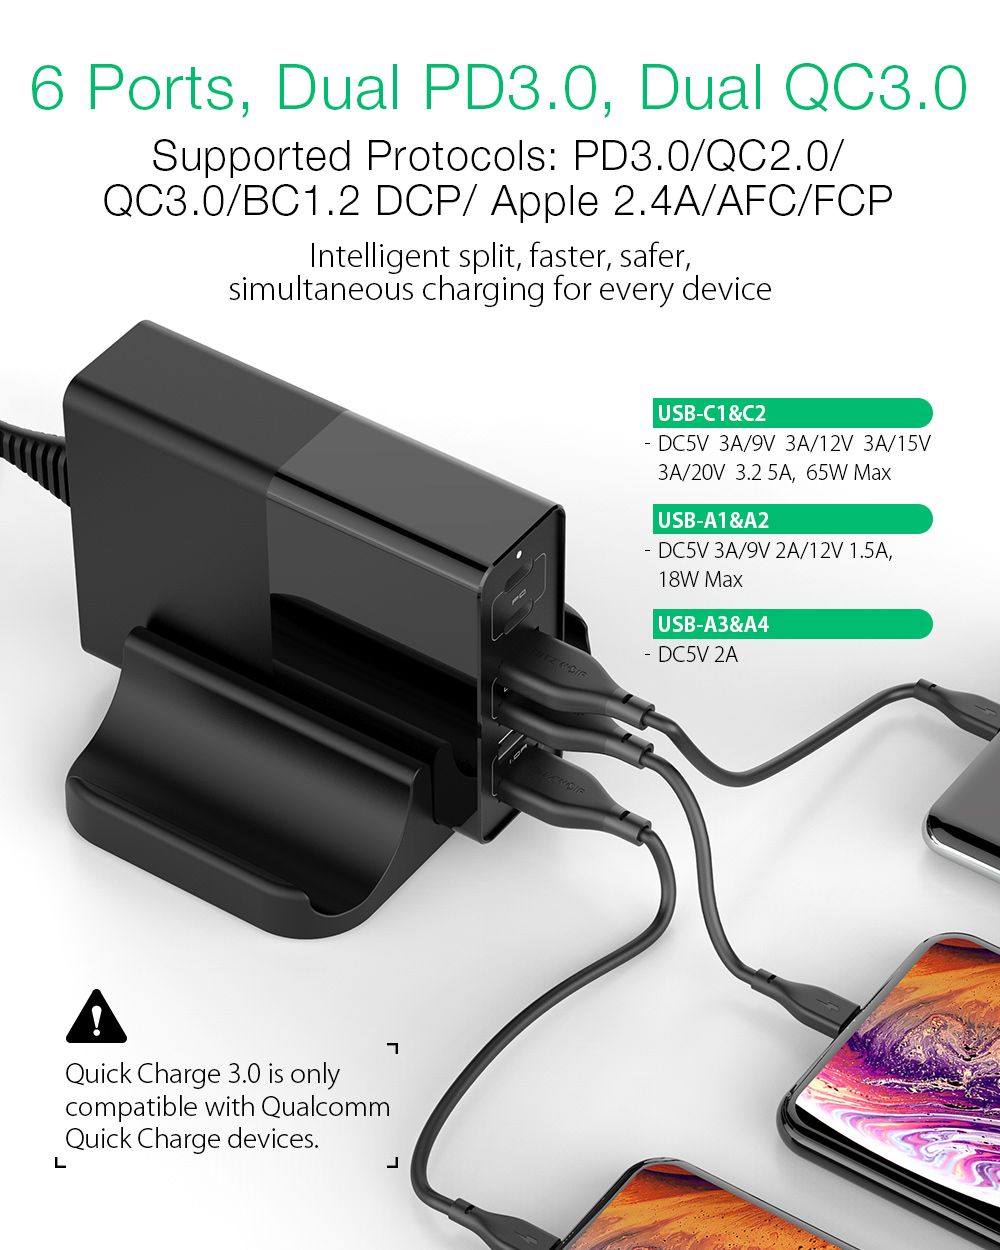 BlitzWolfreg-BW-S16-75W-6-Port-USB-PD-Charger-Desktop-Charging-Station-Dual-PD30-Dual-QC30-Support-F-1707999